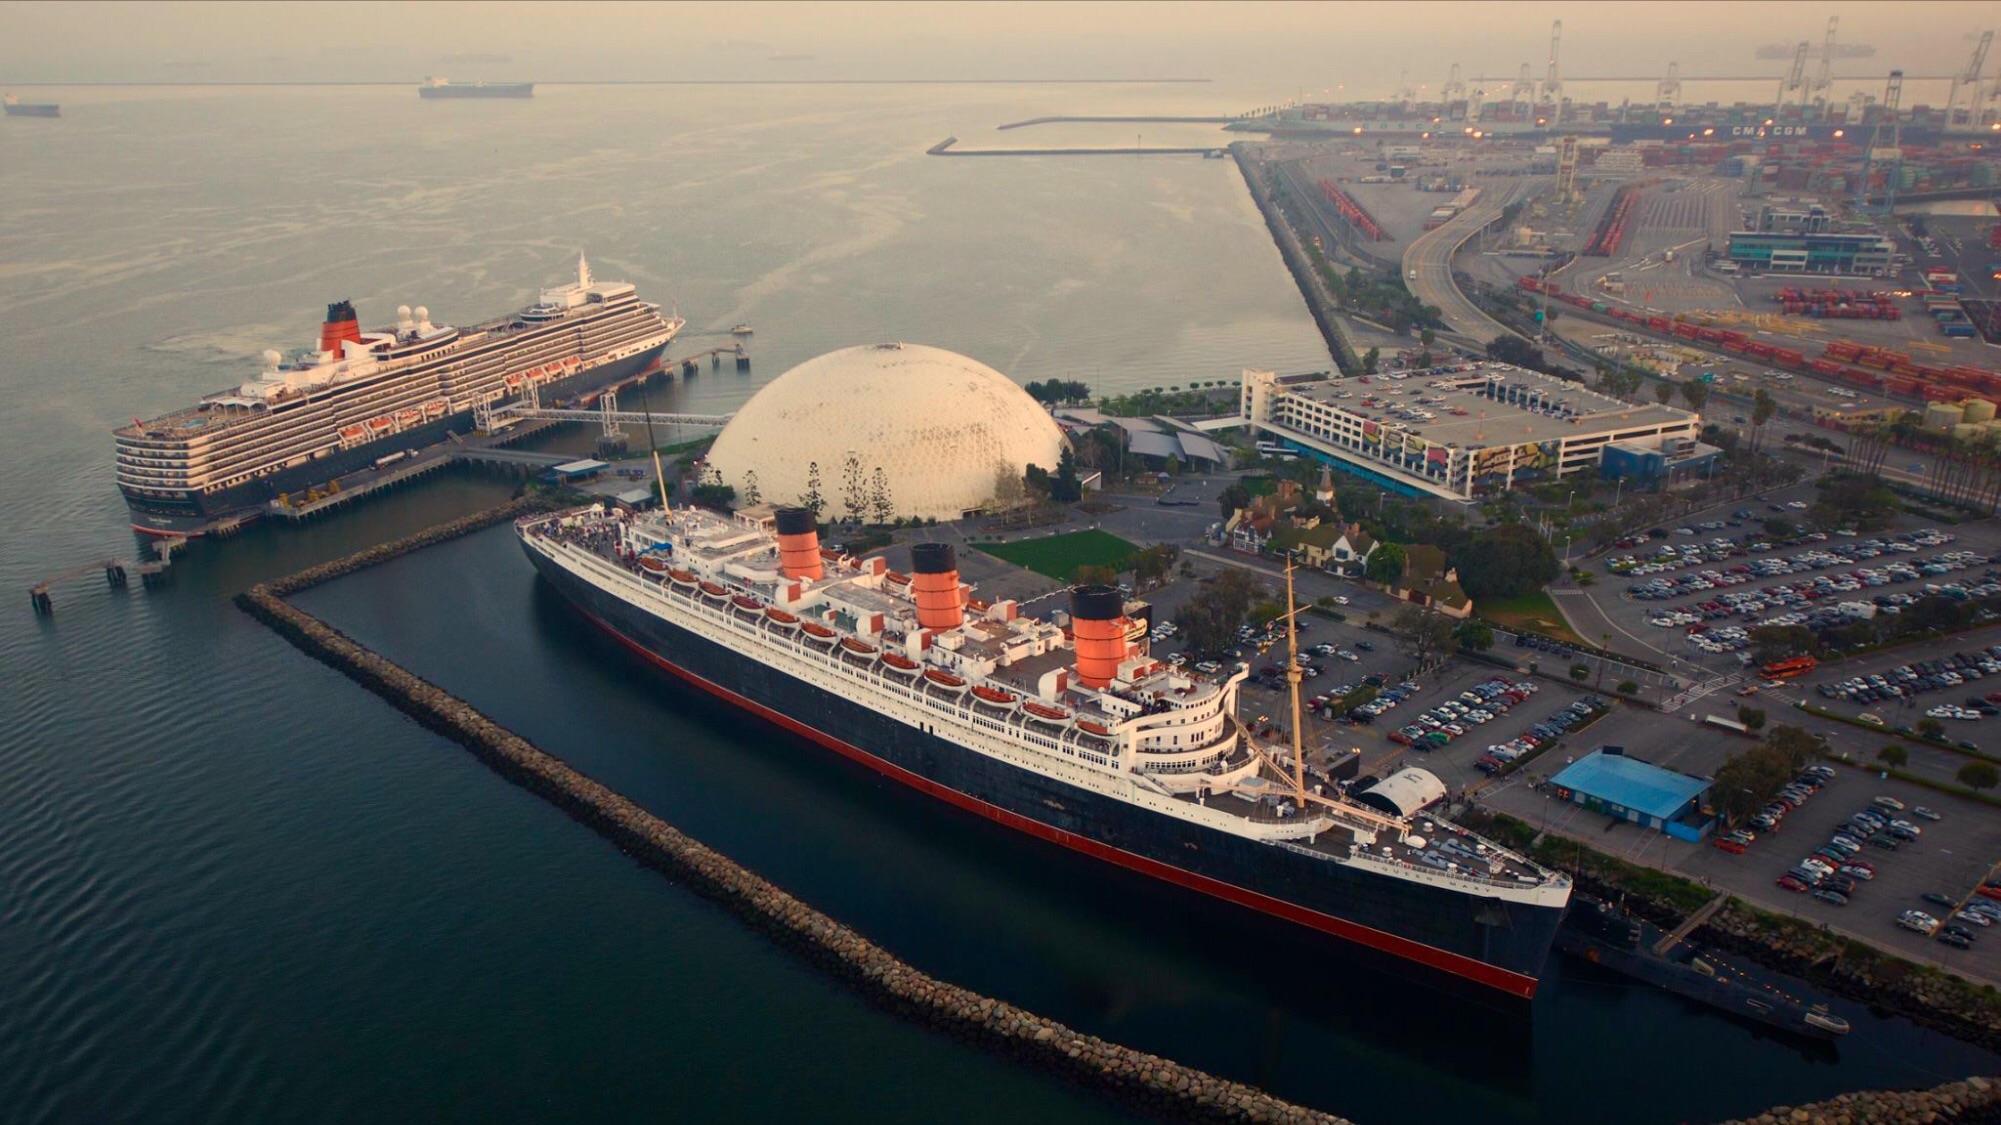 Lusitania3D set Queen Mary, Long Beach, California